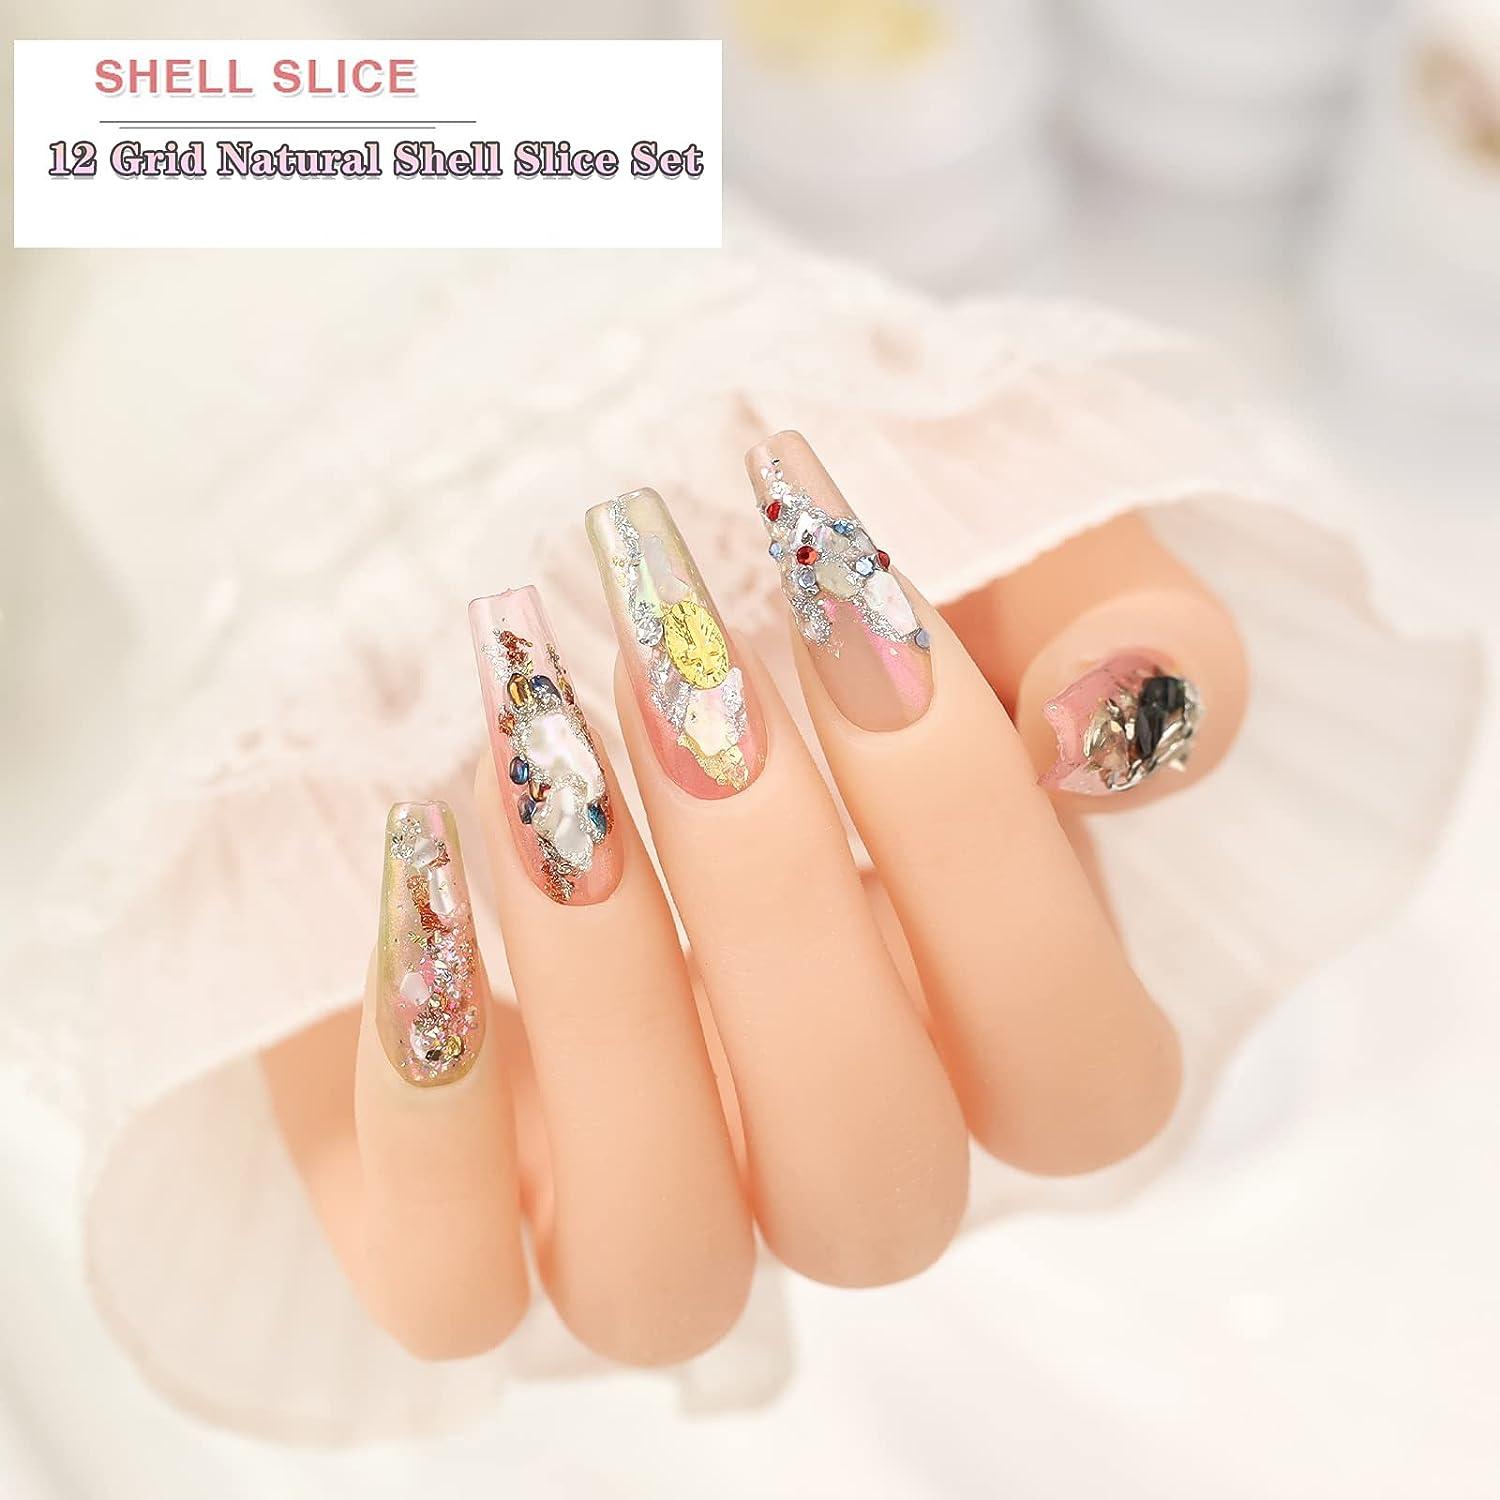 3D Shell Nails with Rhinestone Glue 🐚 